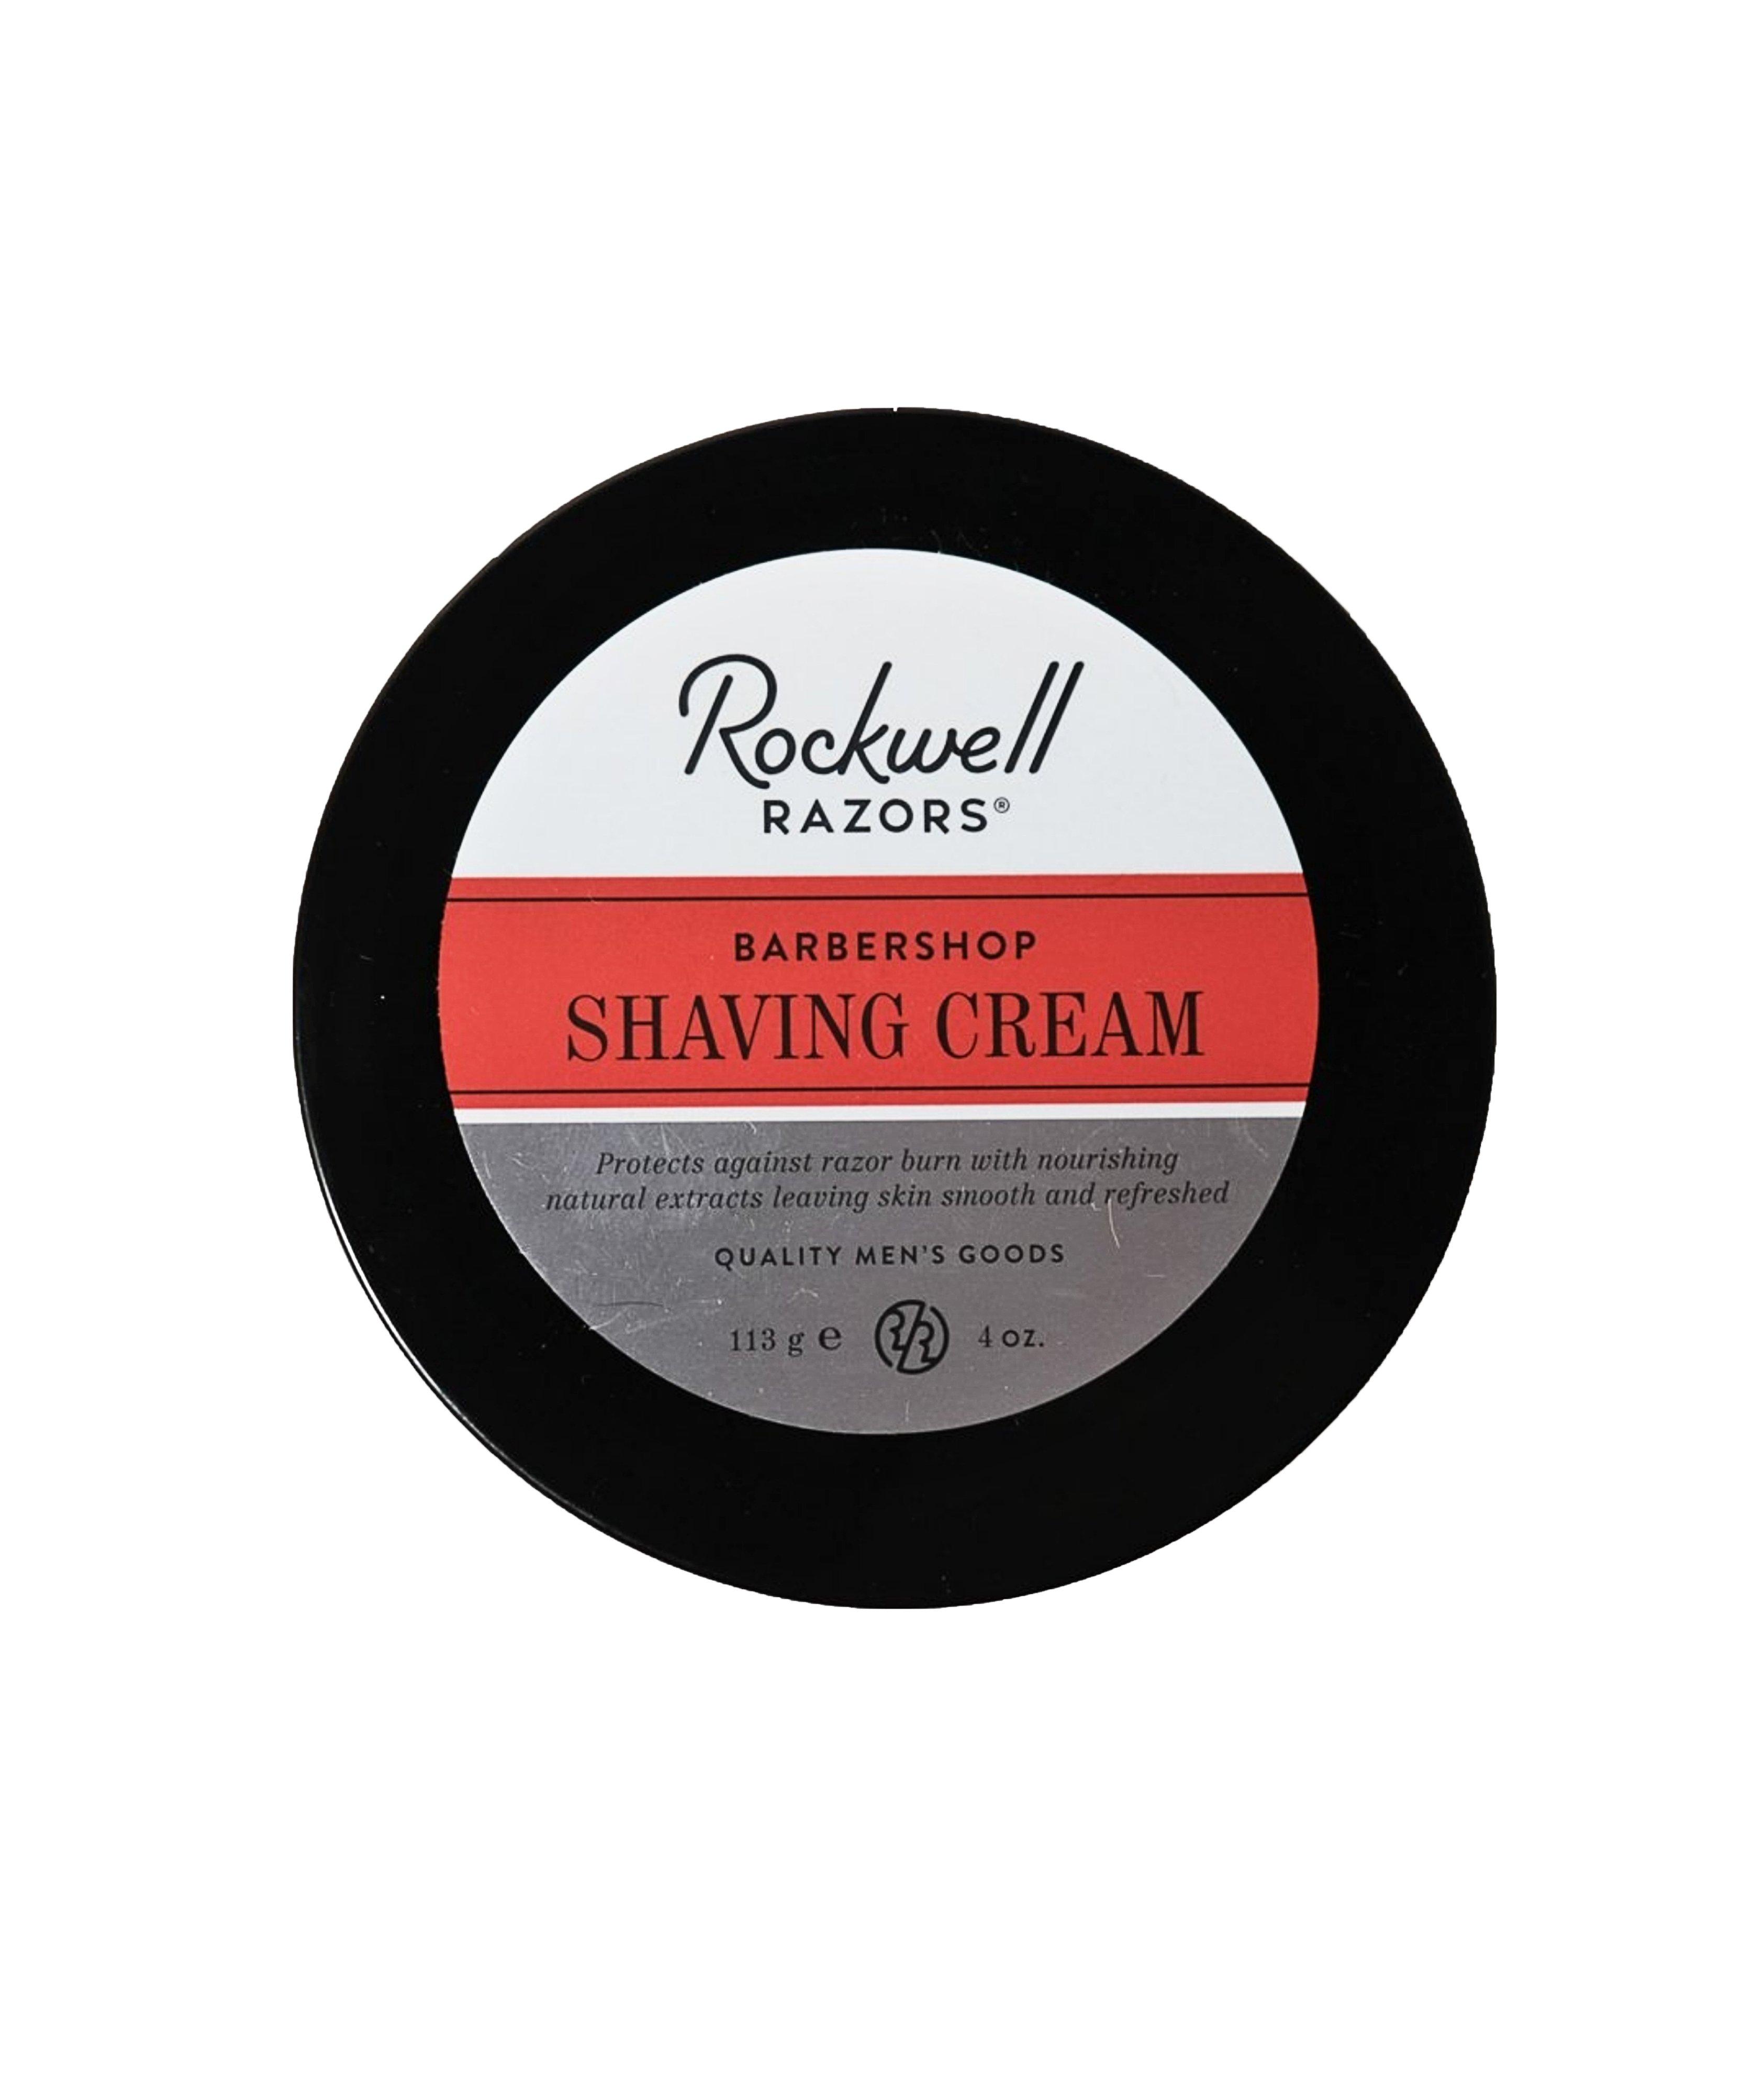 Rockwell Razors Shave Cream - Barbershop Scent image 0